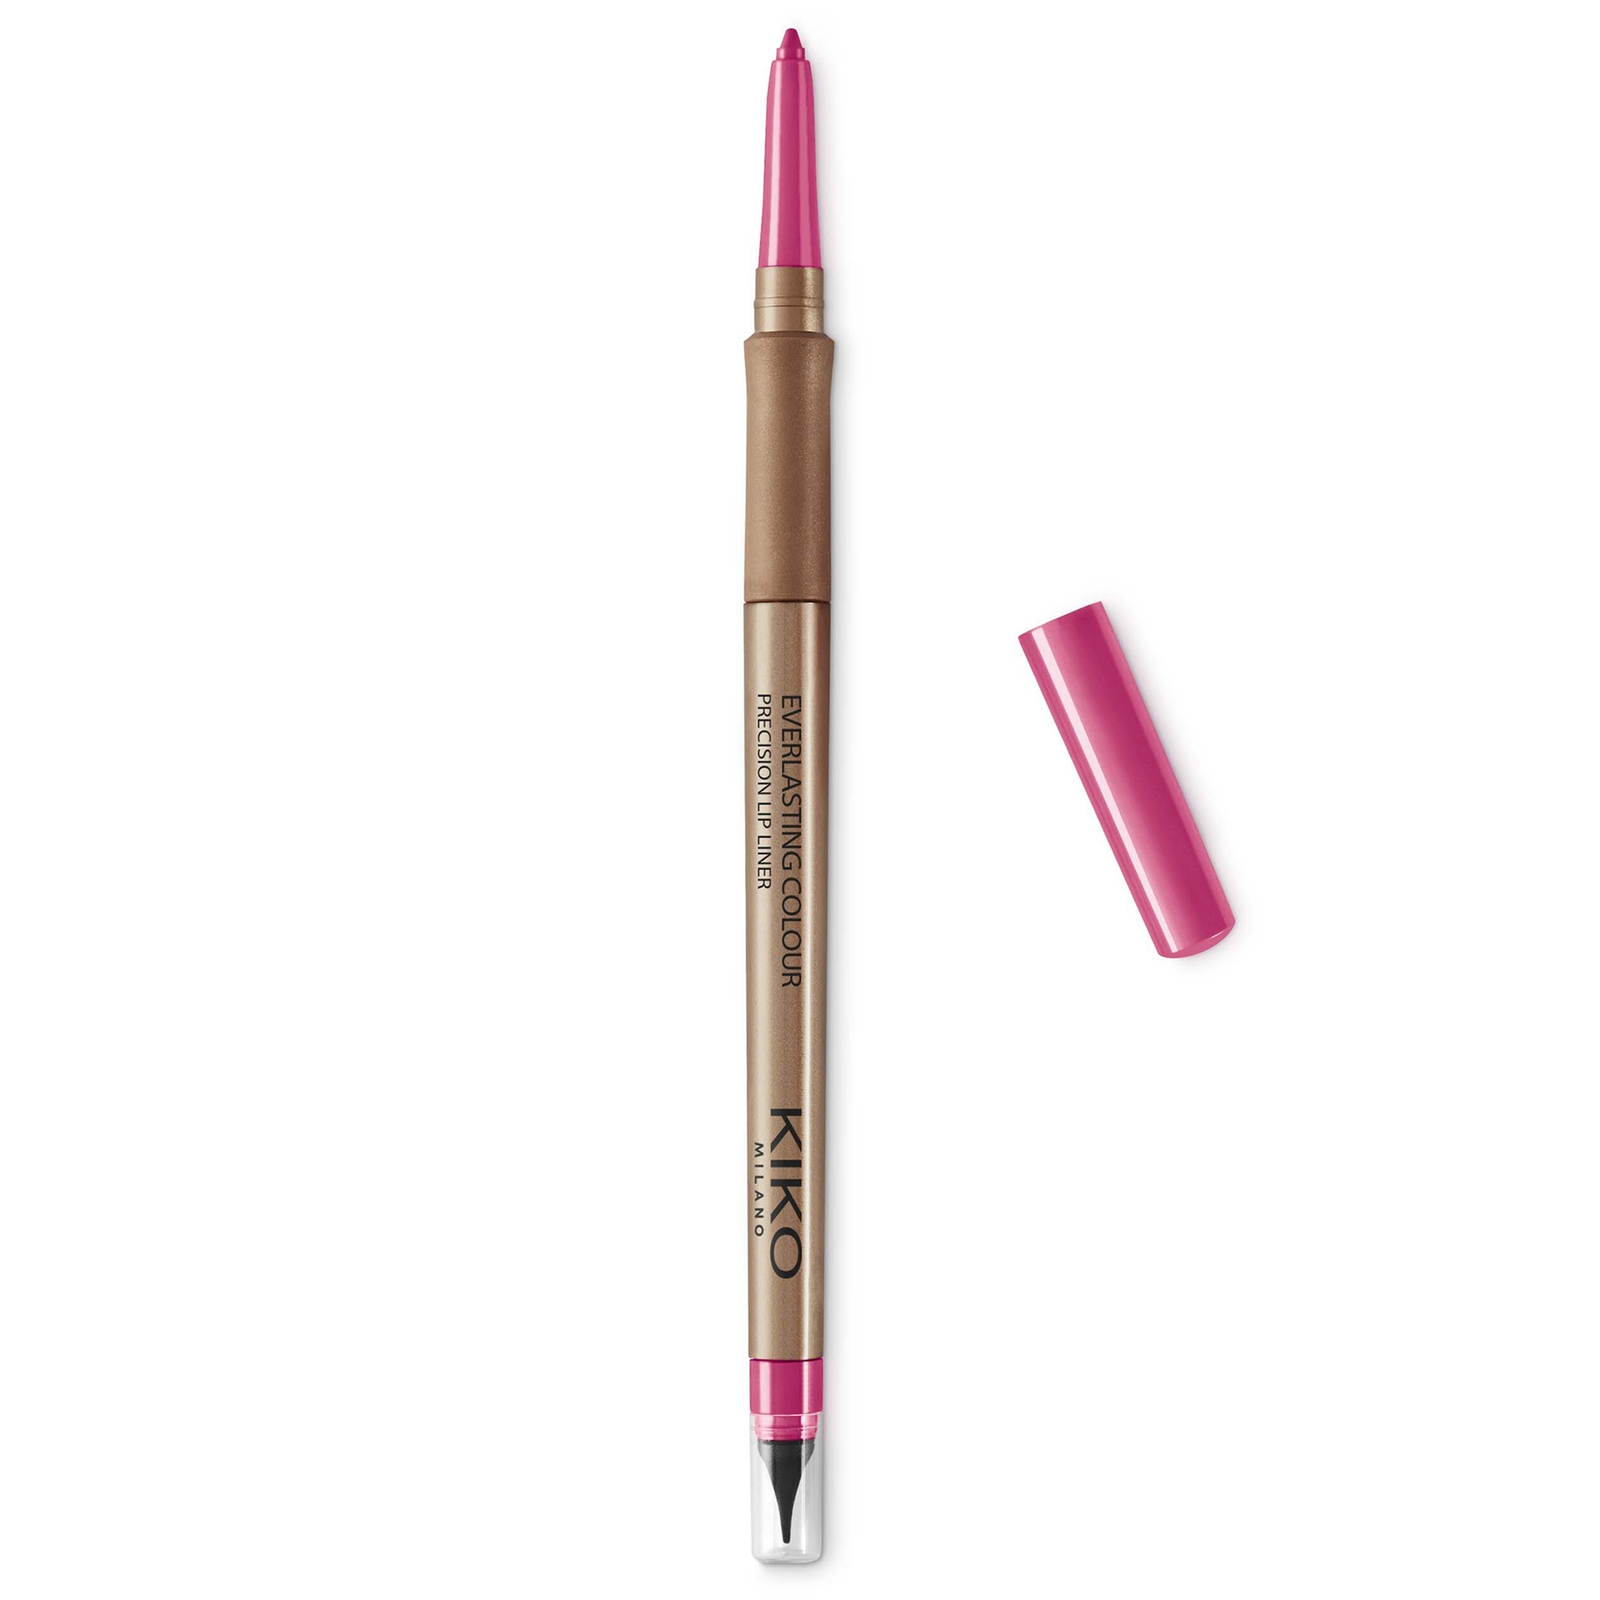 KIKO Milano Everlasting Colour Precision Lip Liner 0.35g (Various Shades) - 01 Cyclamen Pink